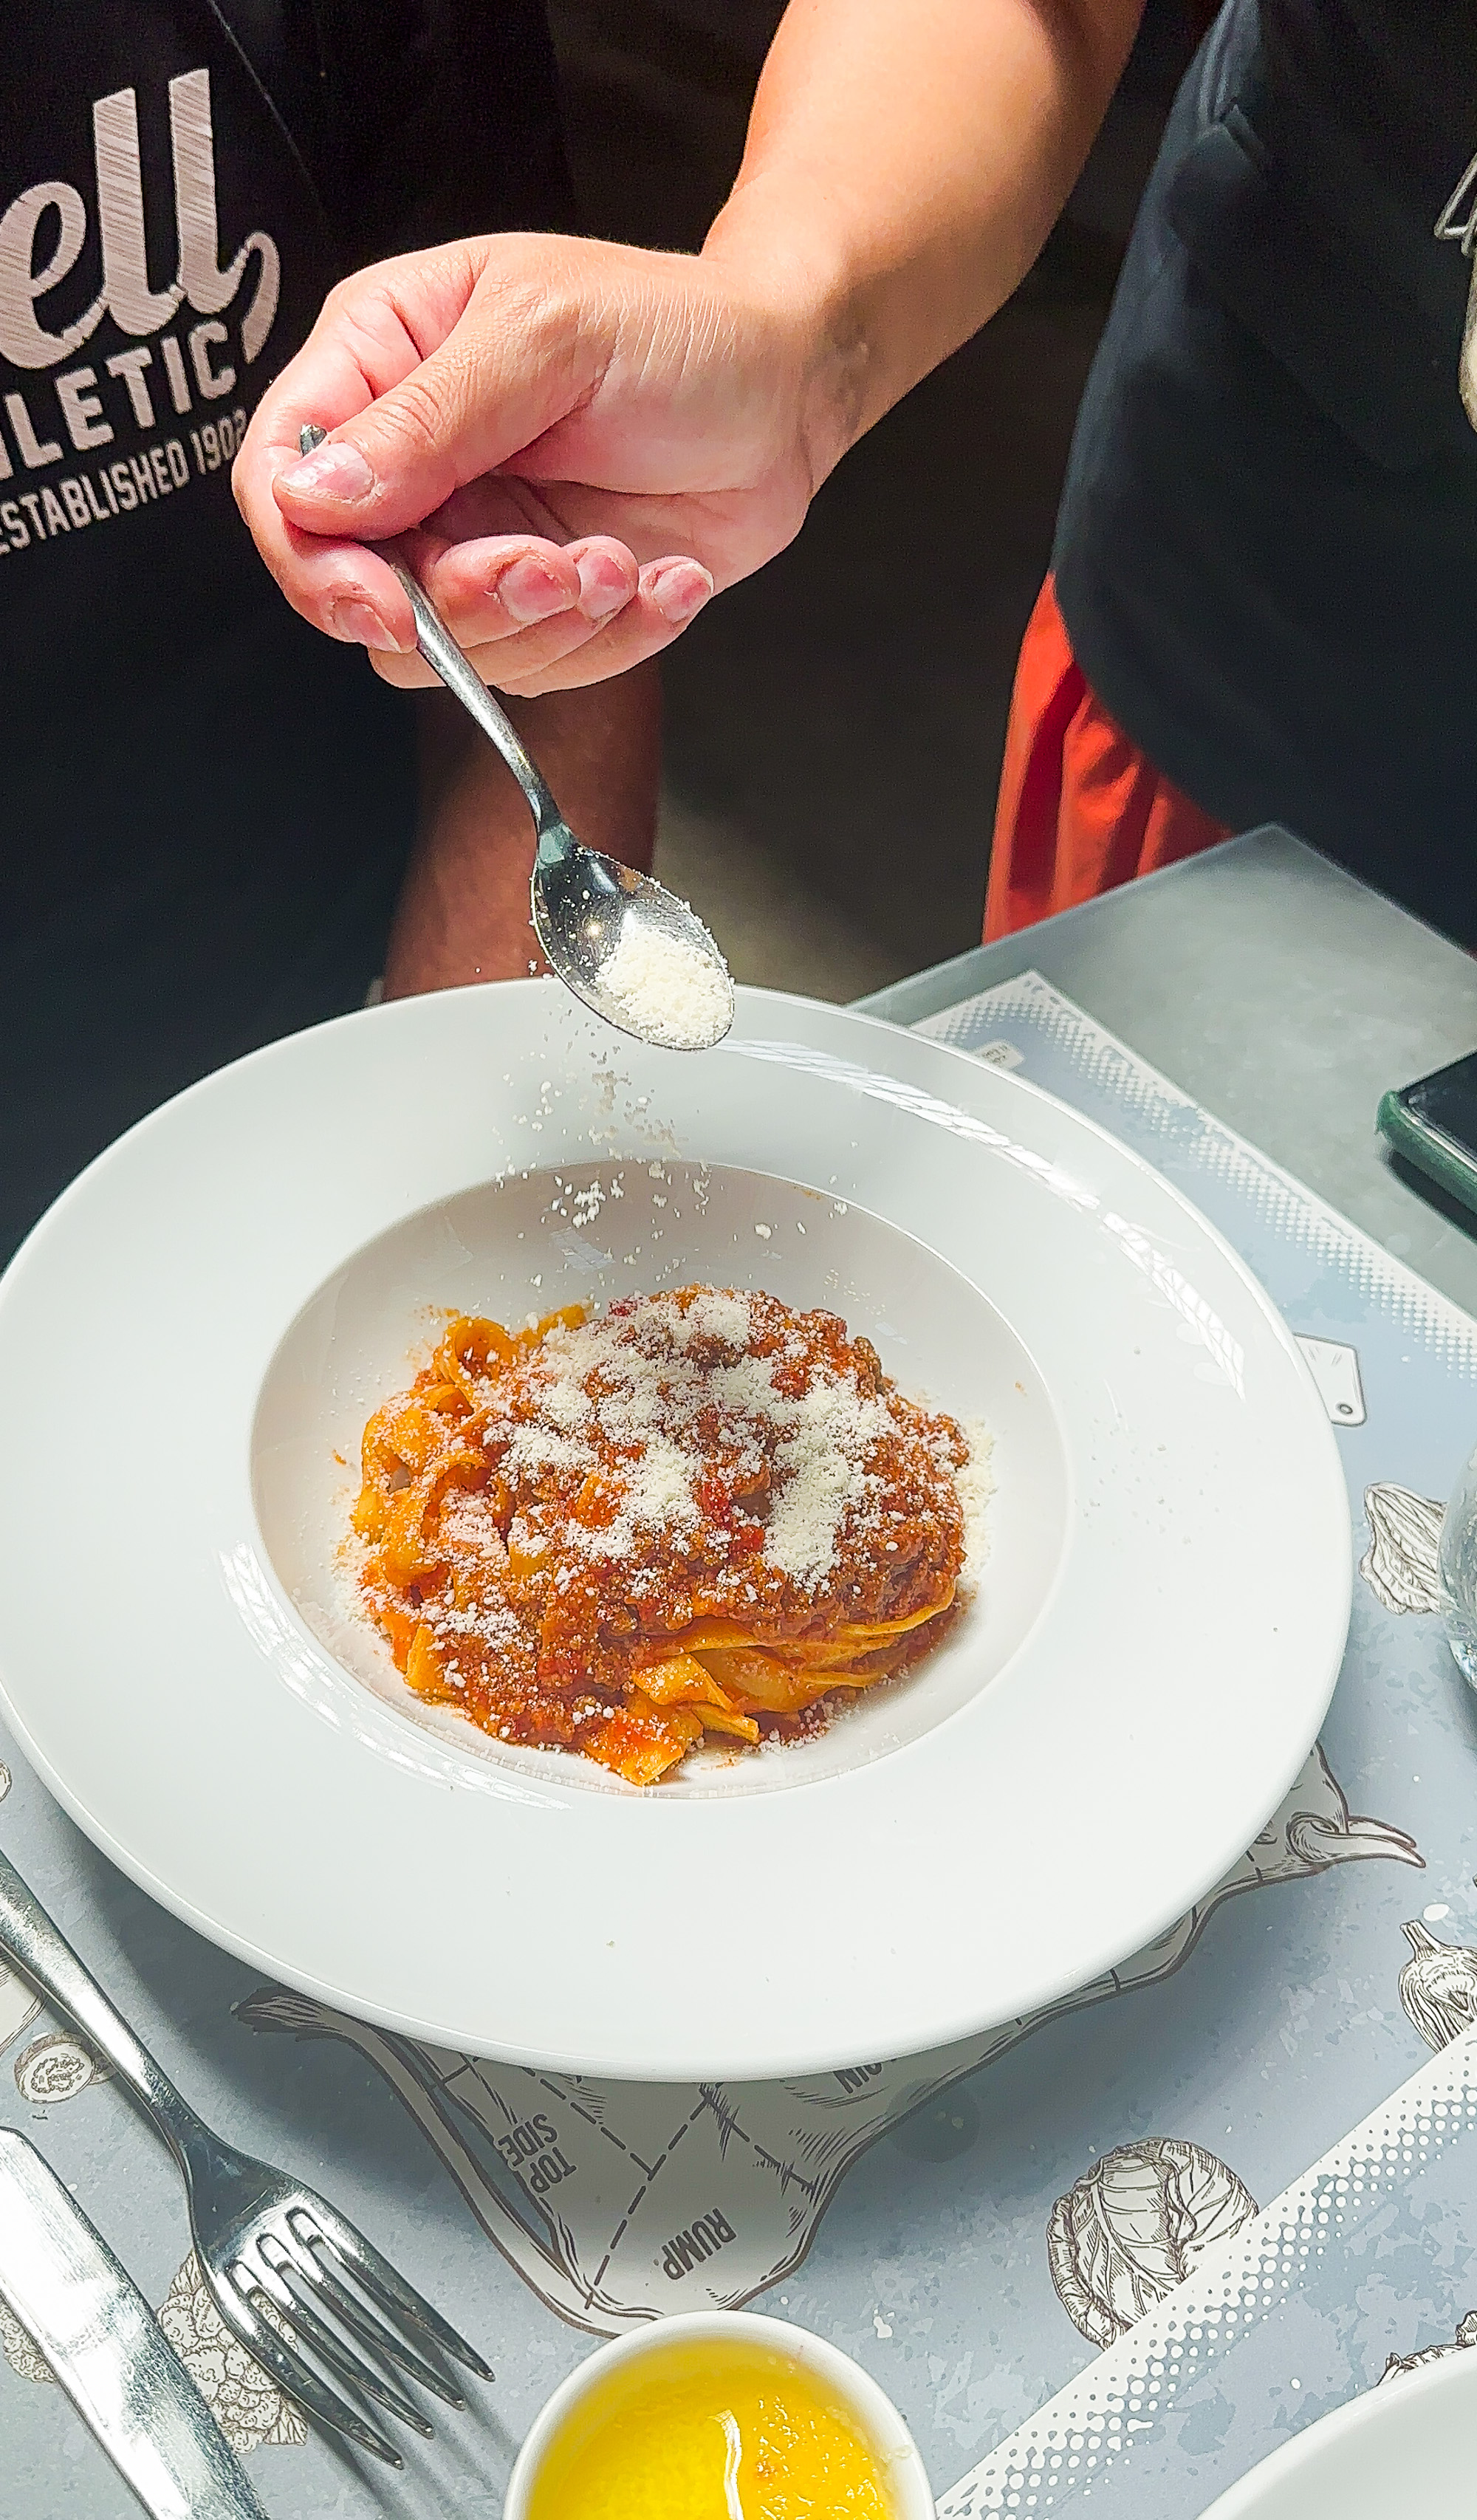 Italy-Ravenna-Mercato-Coperto-Restaurant-serving-parmesan-over-tagliatelle-and-ragu